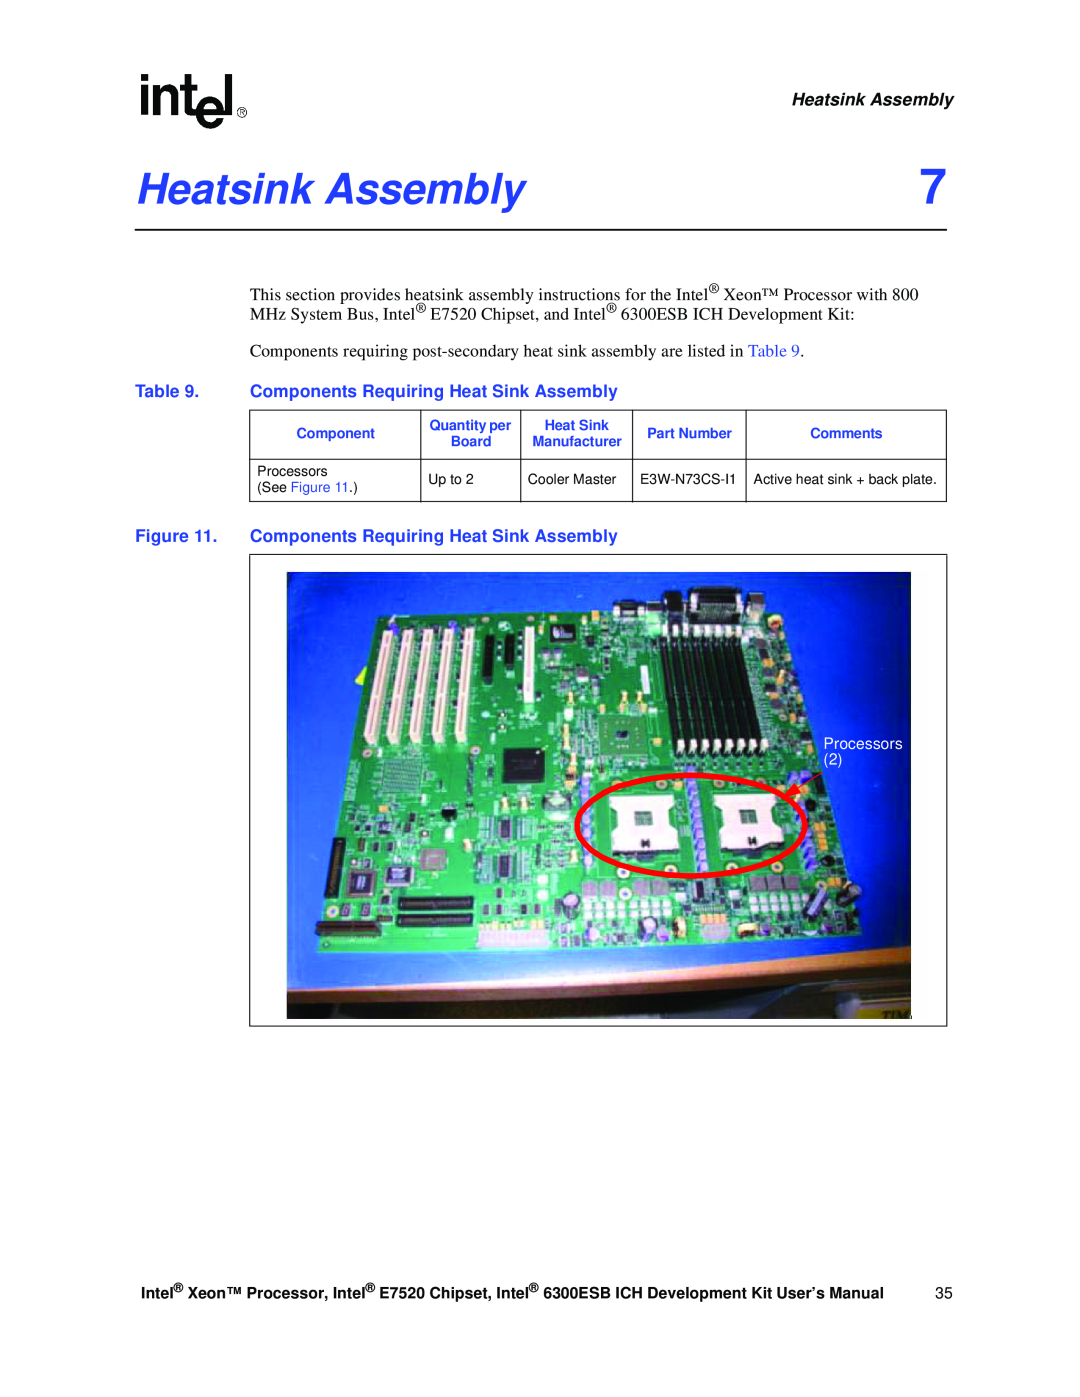 Intel 6300ESB ICH, Xeon user manual Heatsink Assembly, Components Requiring Heat Sink Assembly 